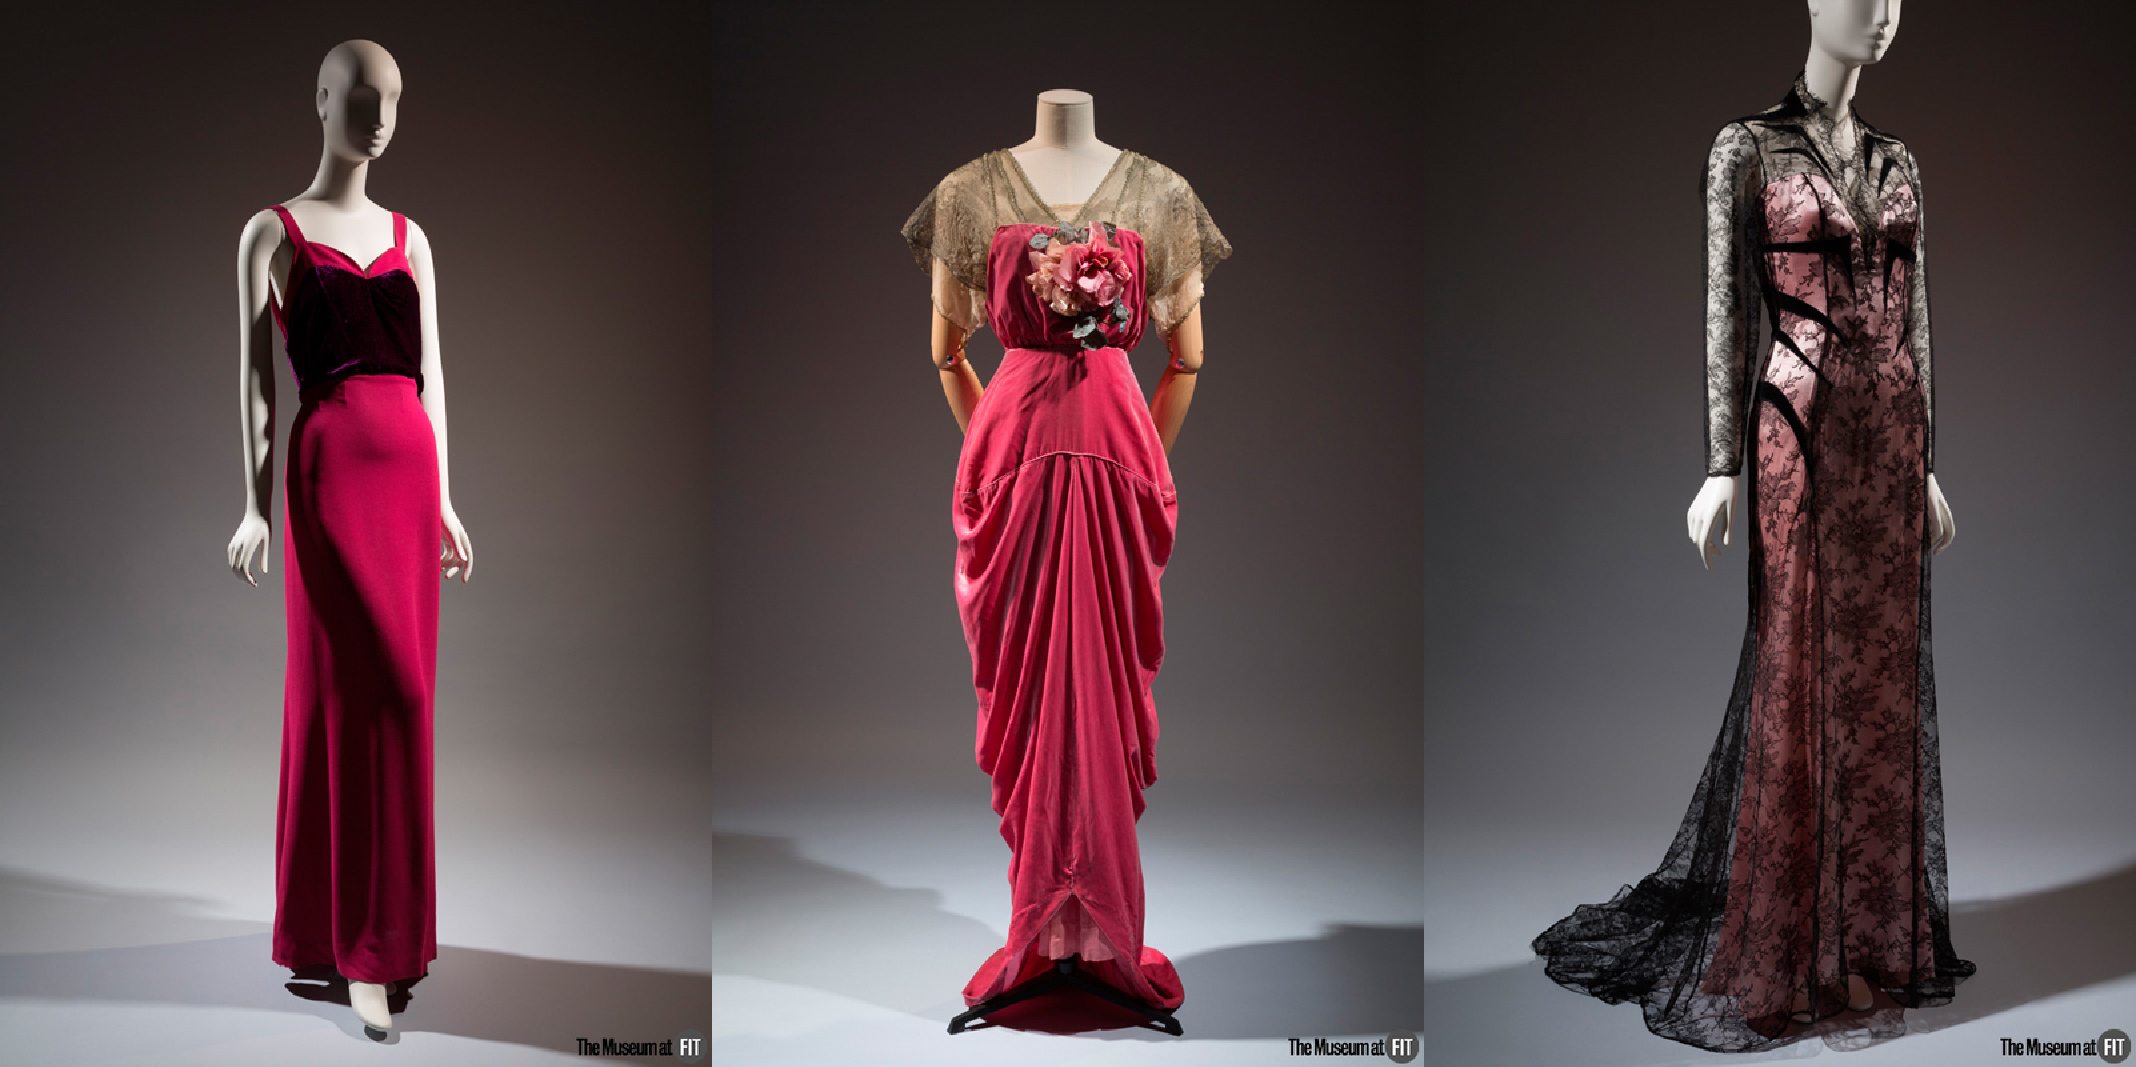 Elsa Schiaparelli gown - Summer 1937, Museum Purchase.
Robert evening gown - 1910-1914, France, Museum Purchase. 
Thierry Mugler evening gown - 1994, Museum Purchase. 